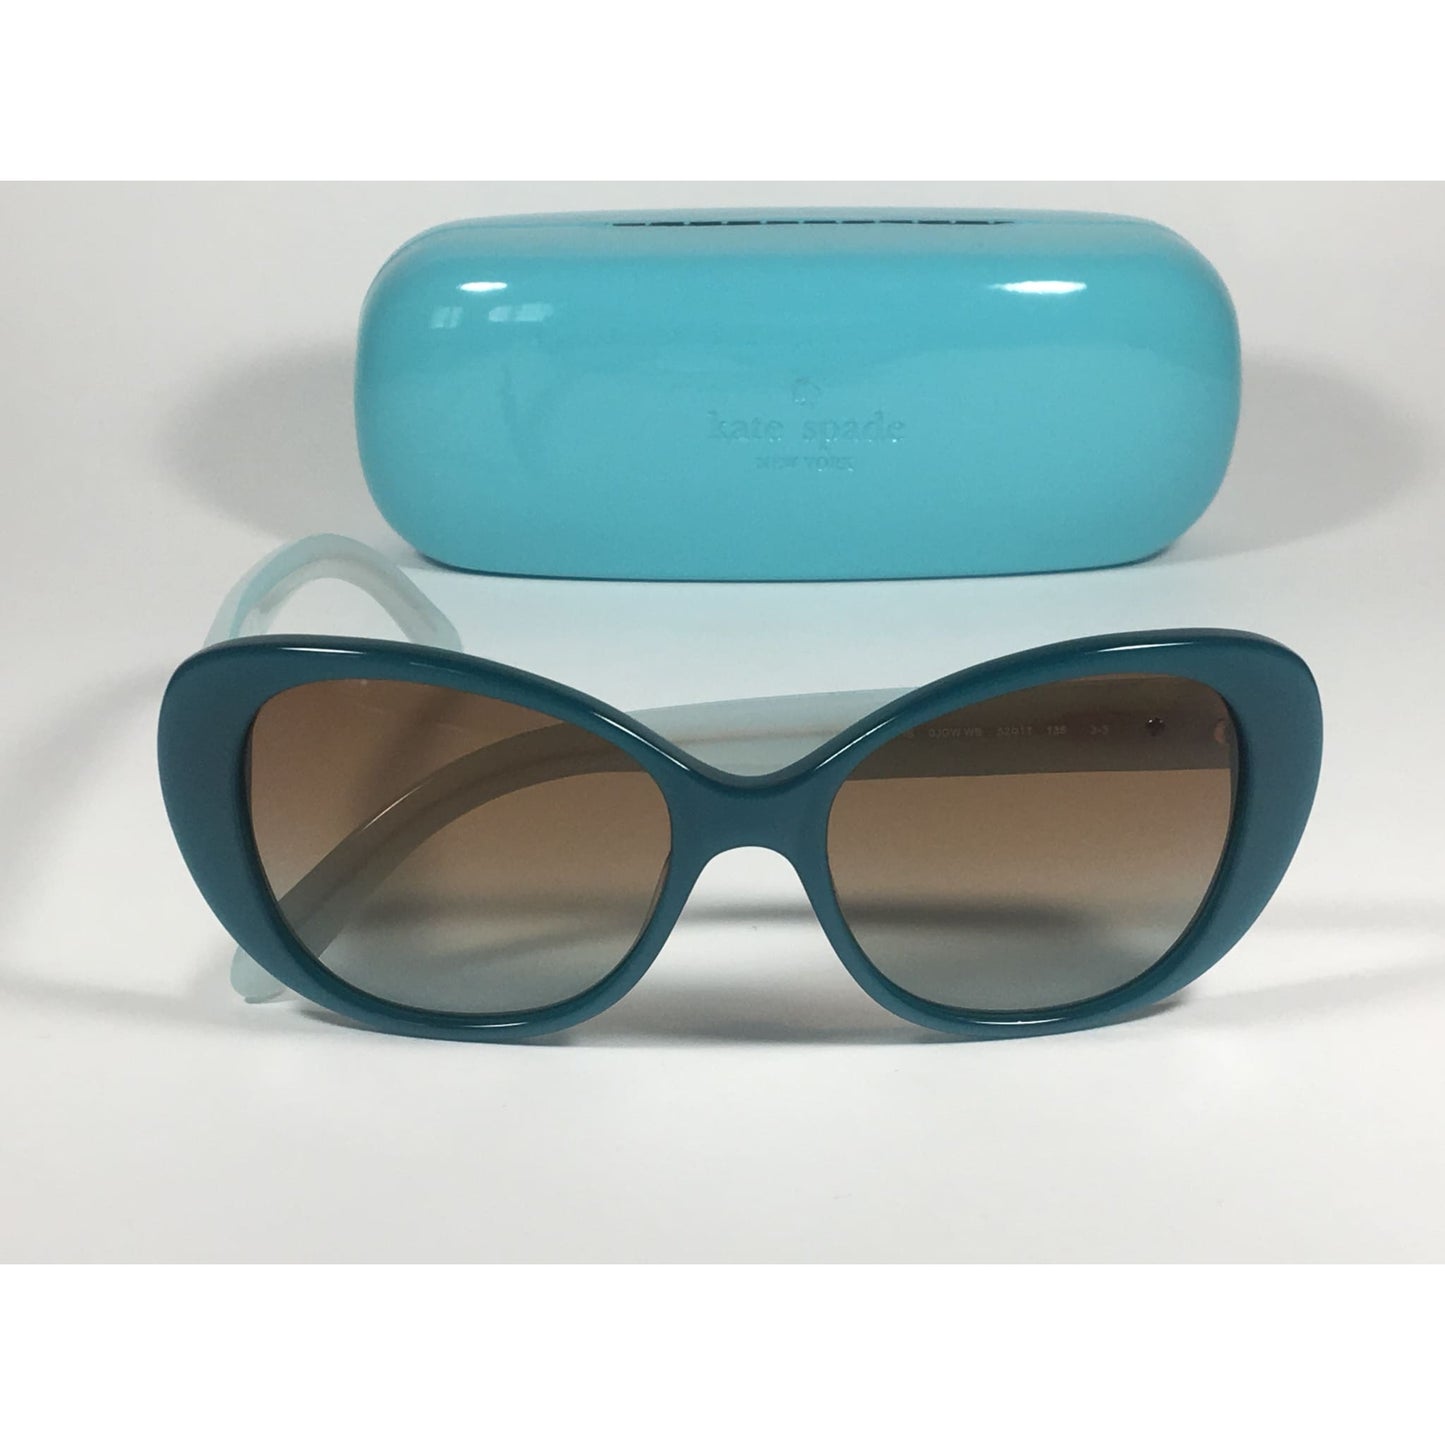 Kate Spade Emery Cat Eye Sunglasses Aqua Sea Glass Brown Gradient Lens Emery/s 0JGW WB - Sunglasses